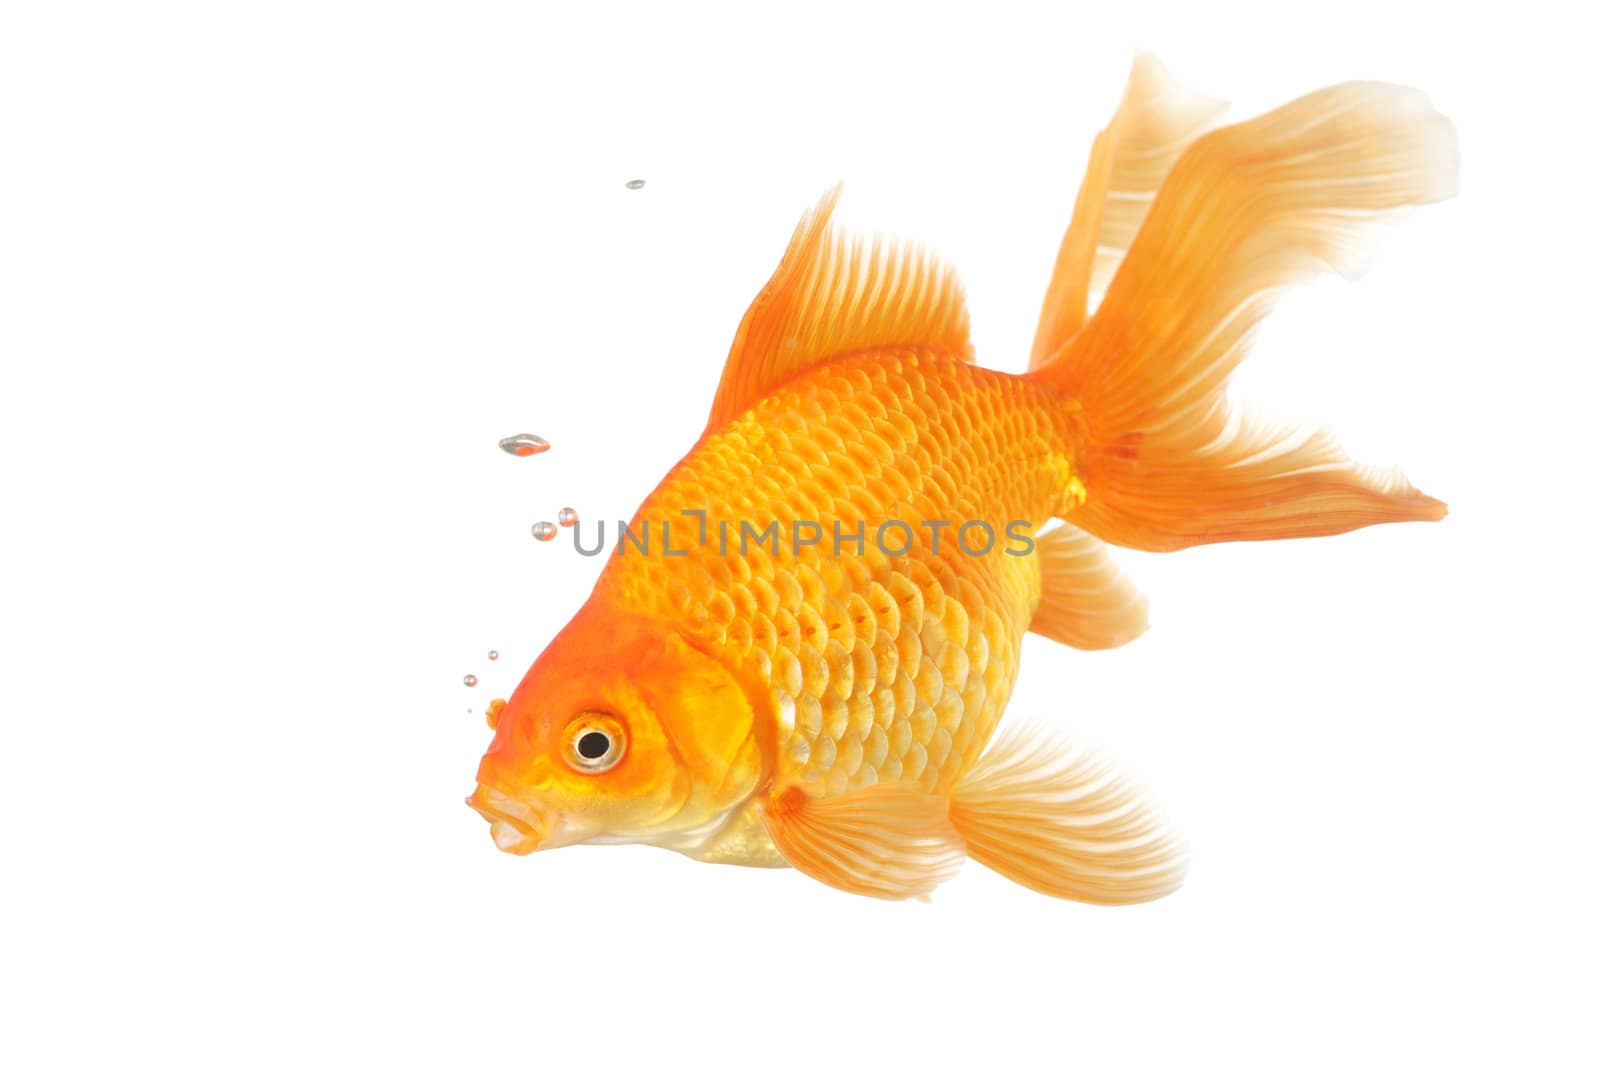 Beautiful fantail goldfish by jarenwicklund